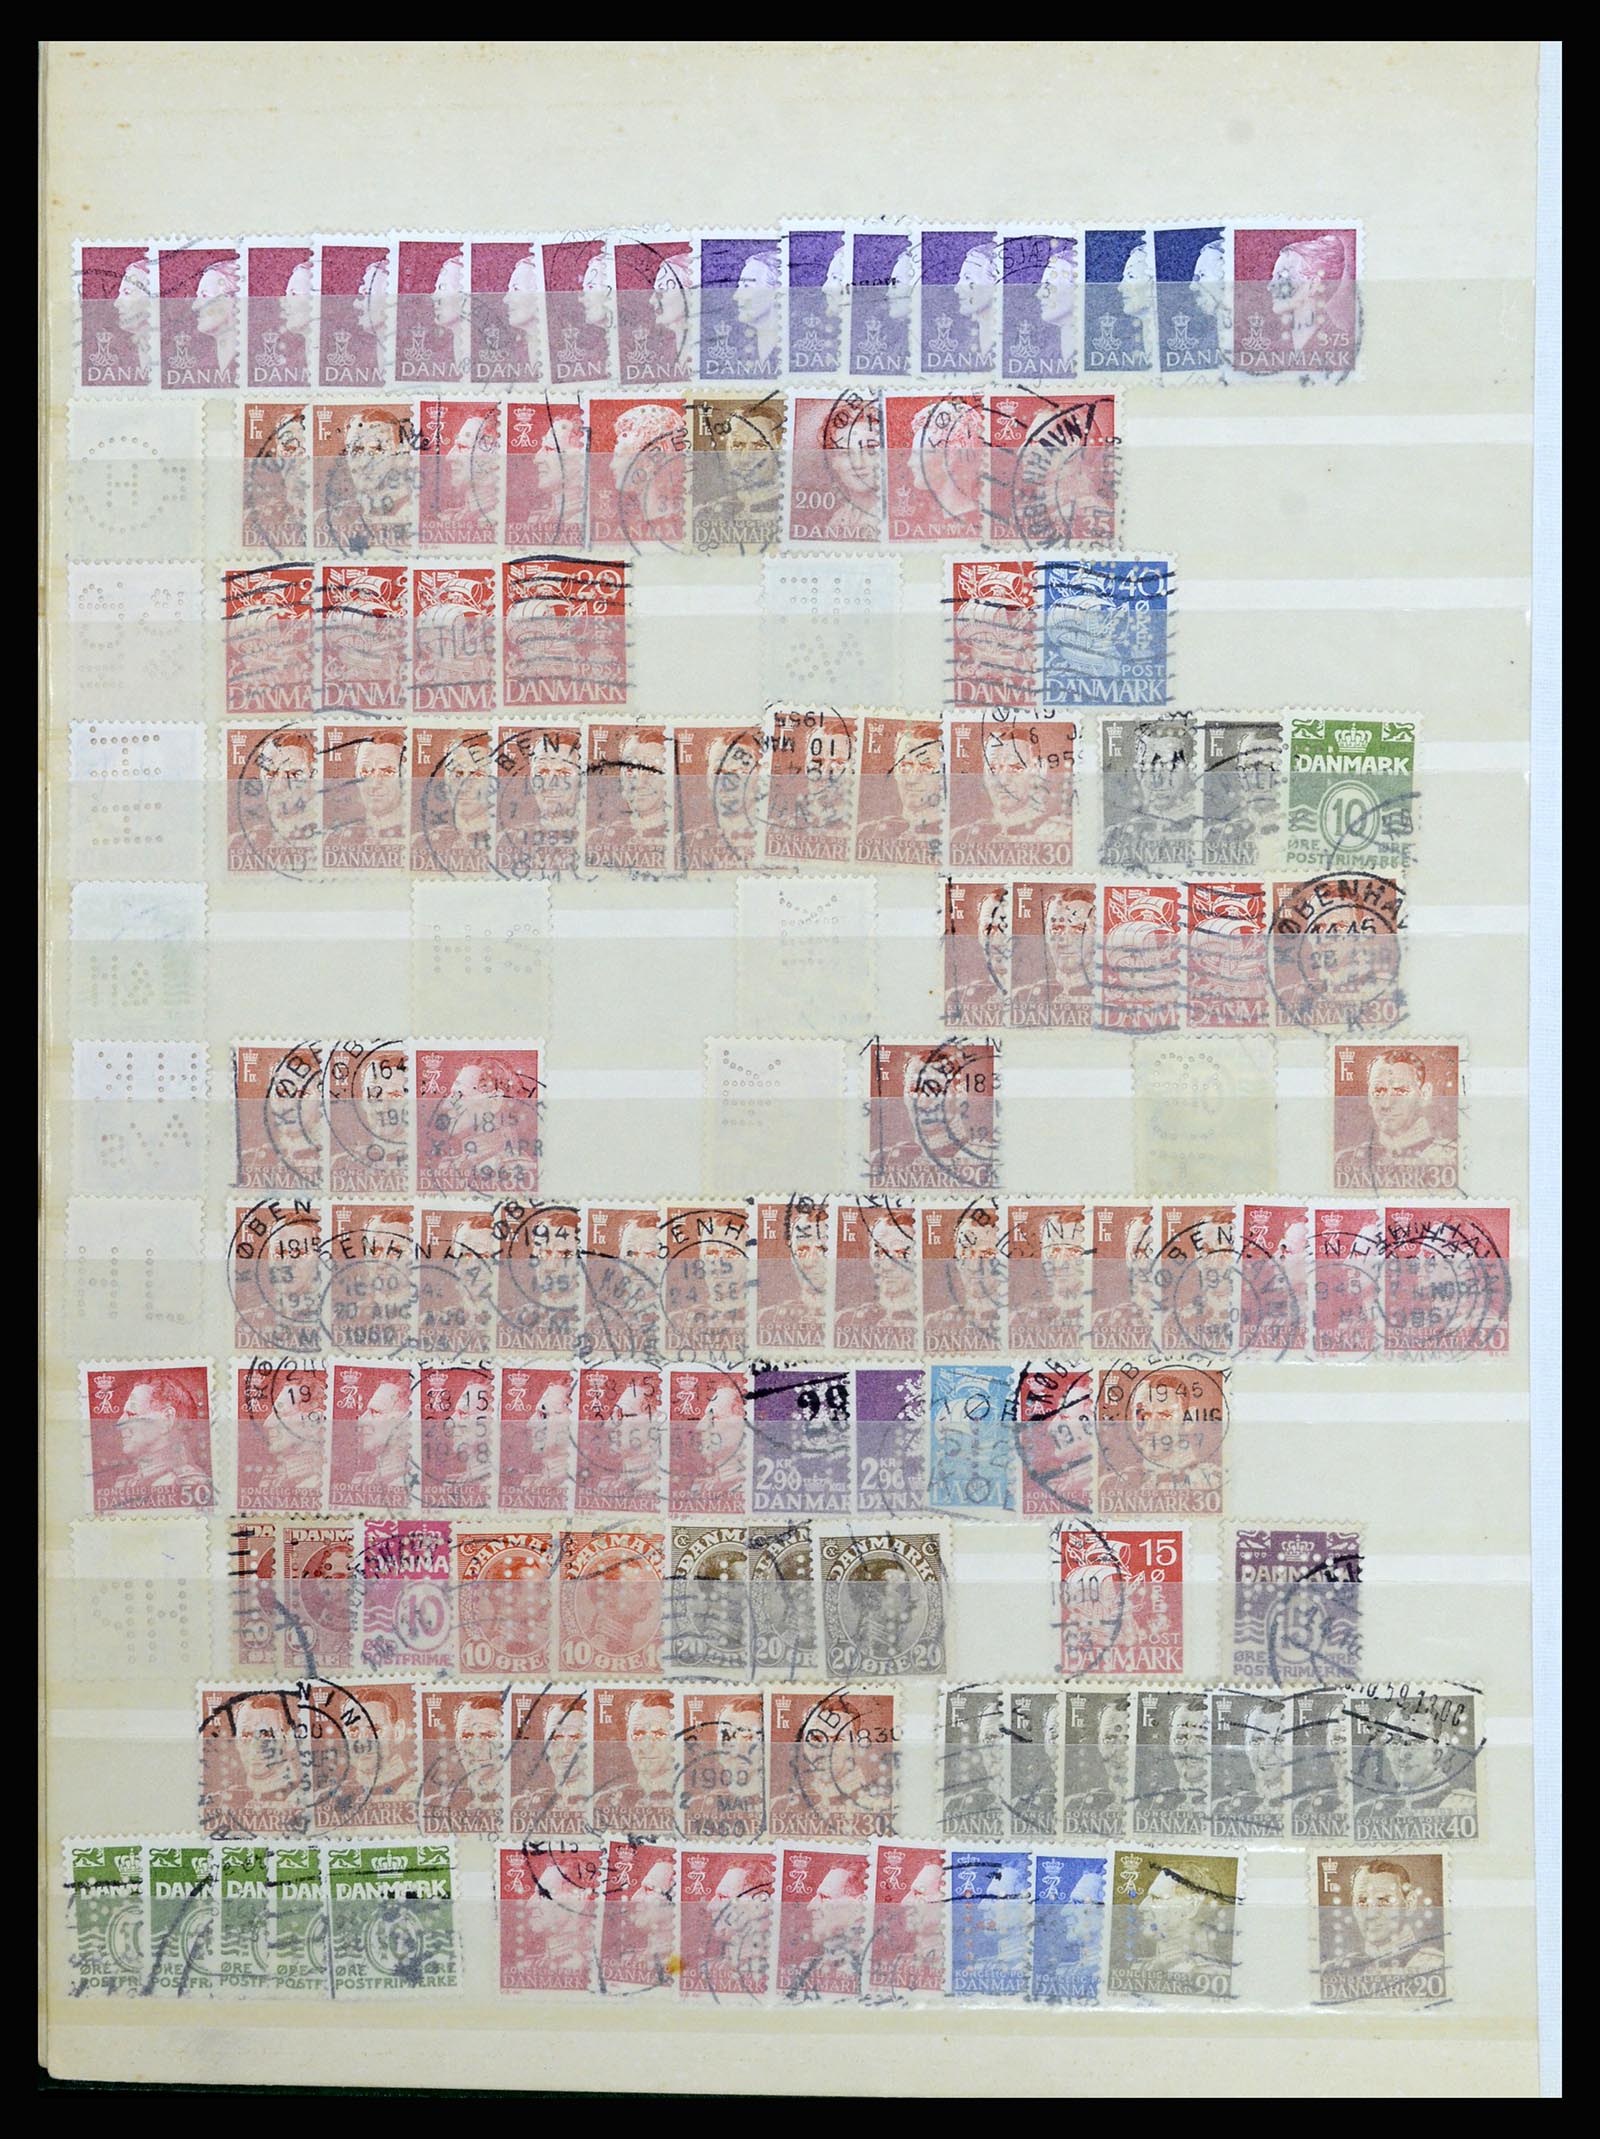 37056 076 - Stamp collection 37056 Denmark perfins.